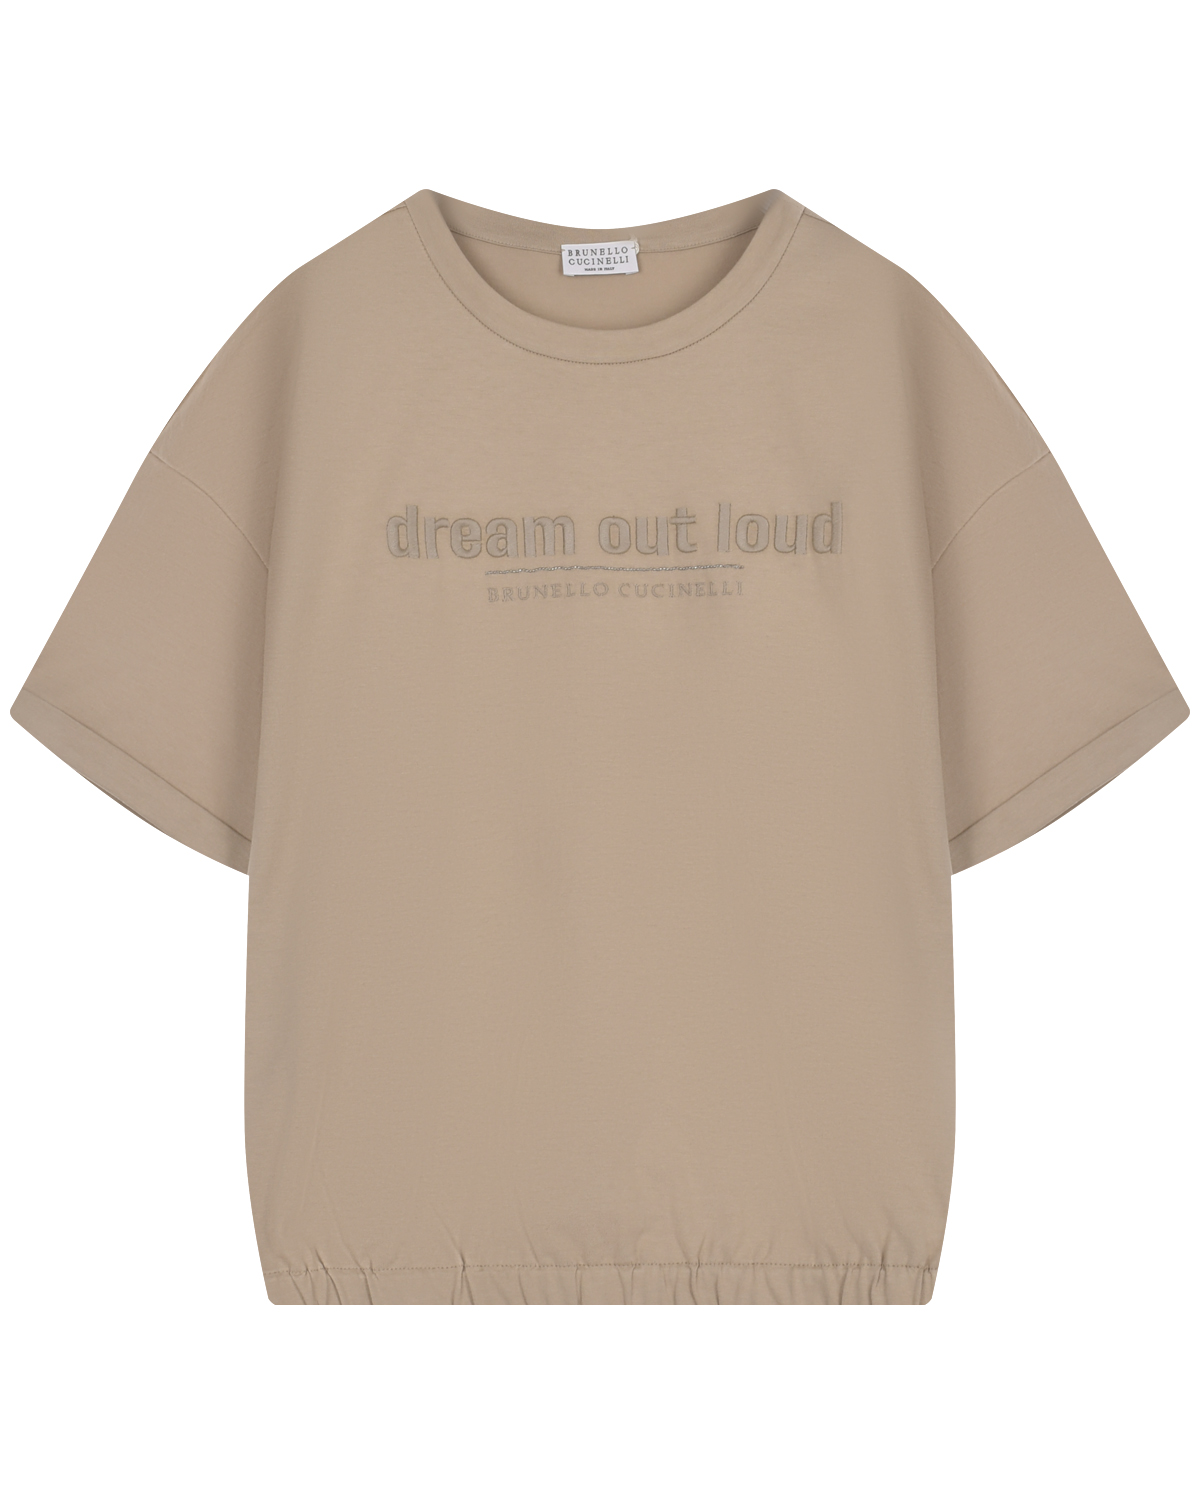 Бежевая футболка с принтом "dream out loud" Brunello Cucinelli, размер 152, цвет бежевый - фото 1